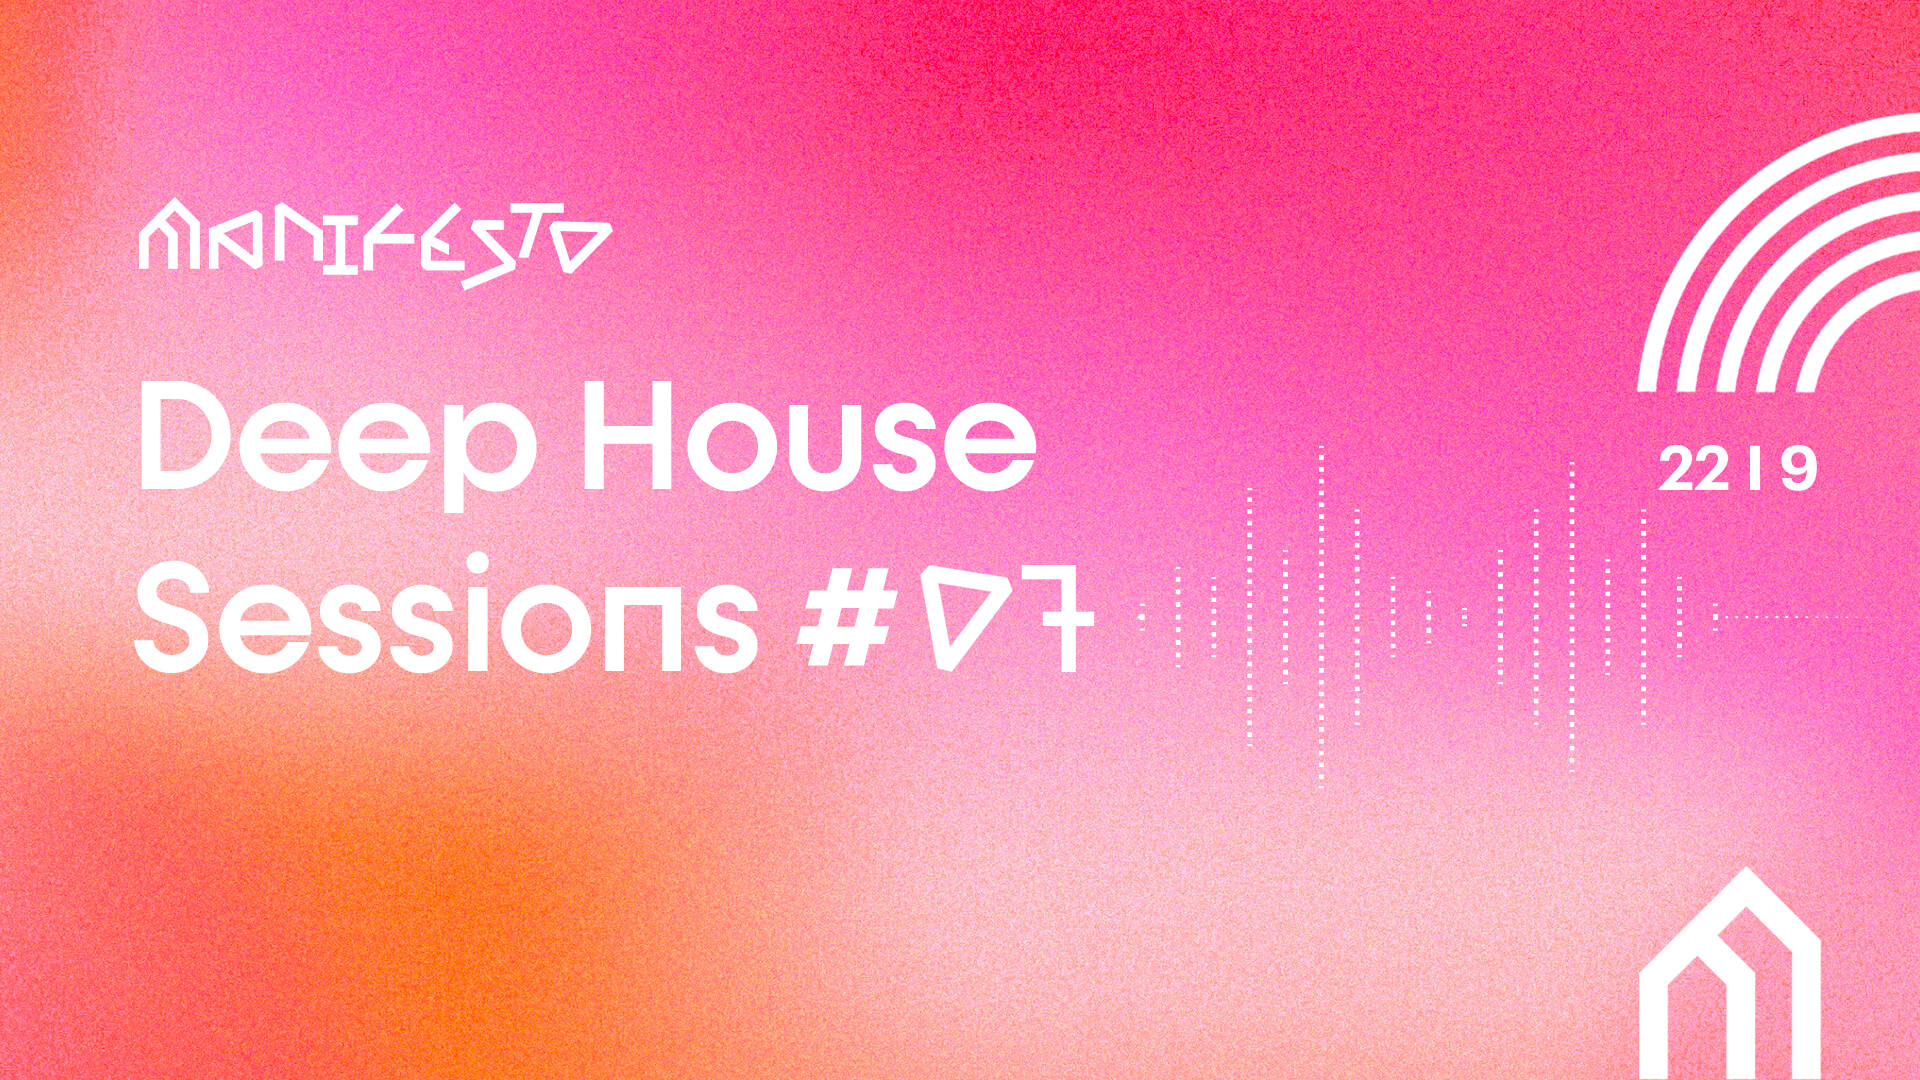 Manifesto Deep House Sessions #07, 22/09